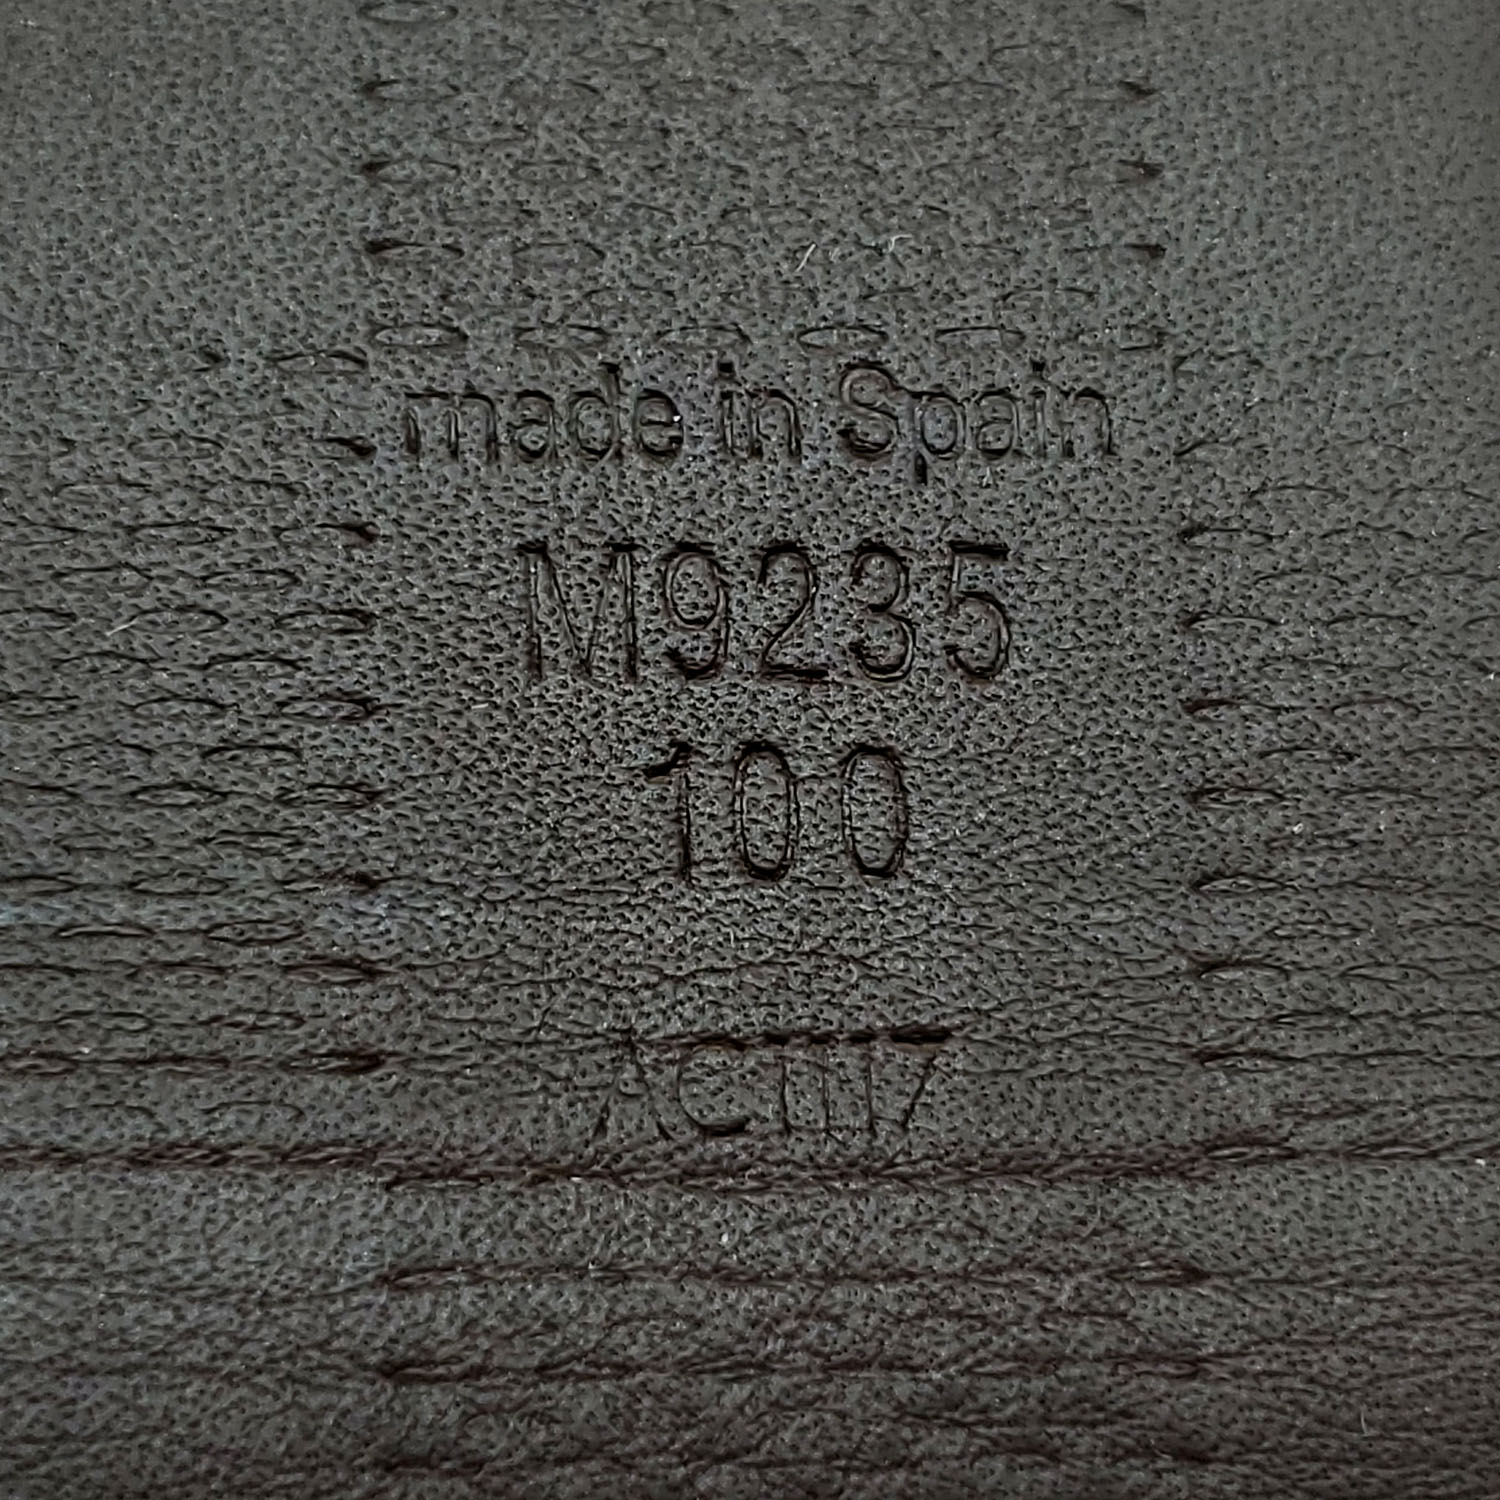 Louis Vuitton 2016 Neo Inventeur Reversible 40MM Belt - Brown